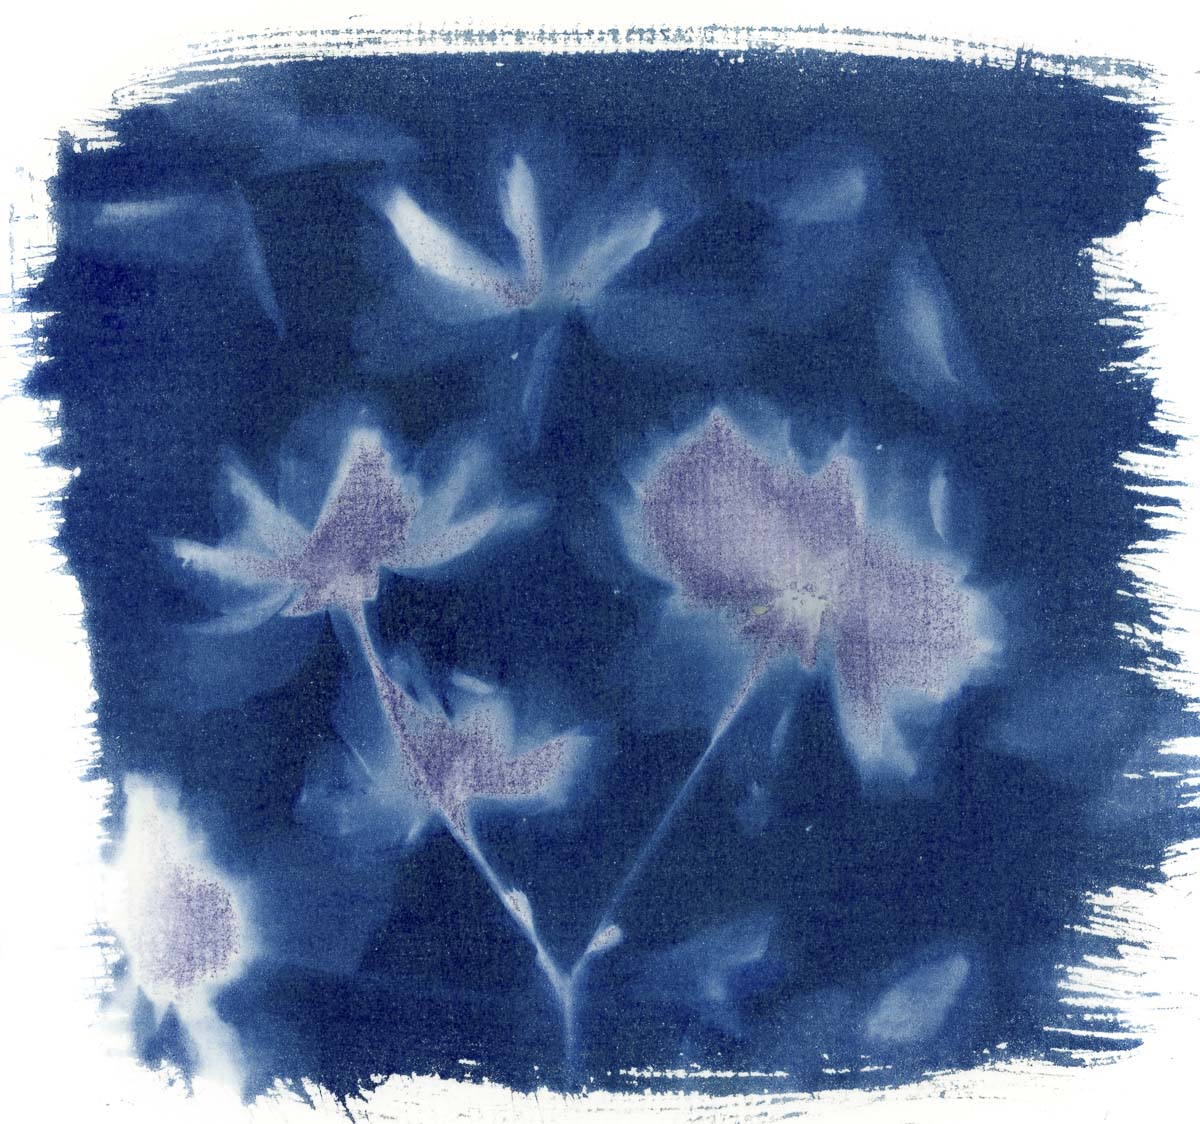 Cyanotype print of flowers